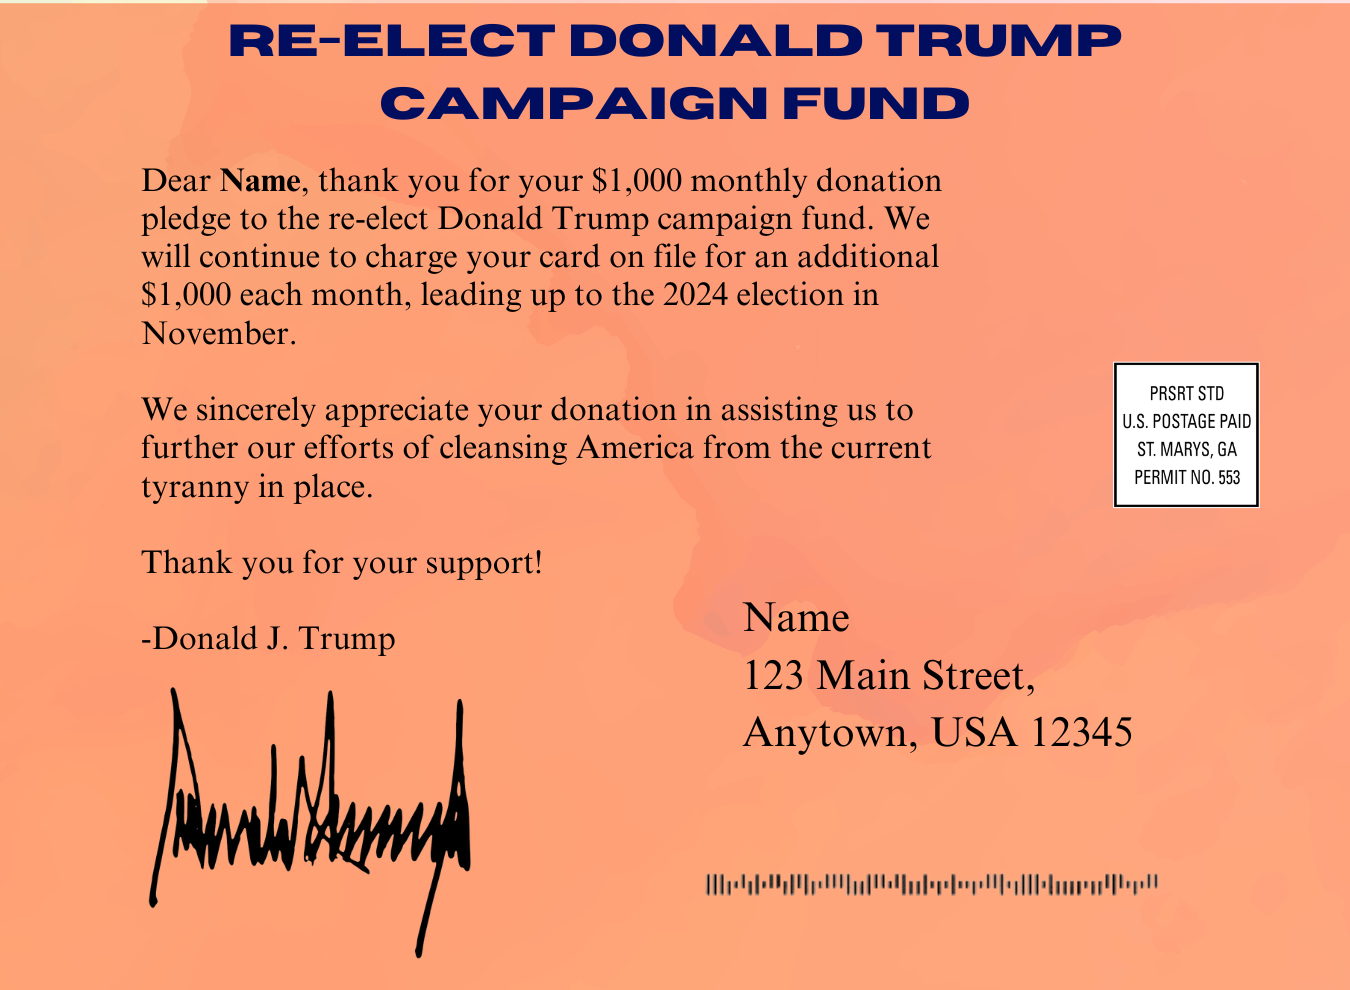 Trump 2024 Donation Card